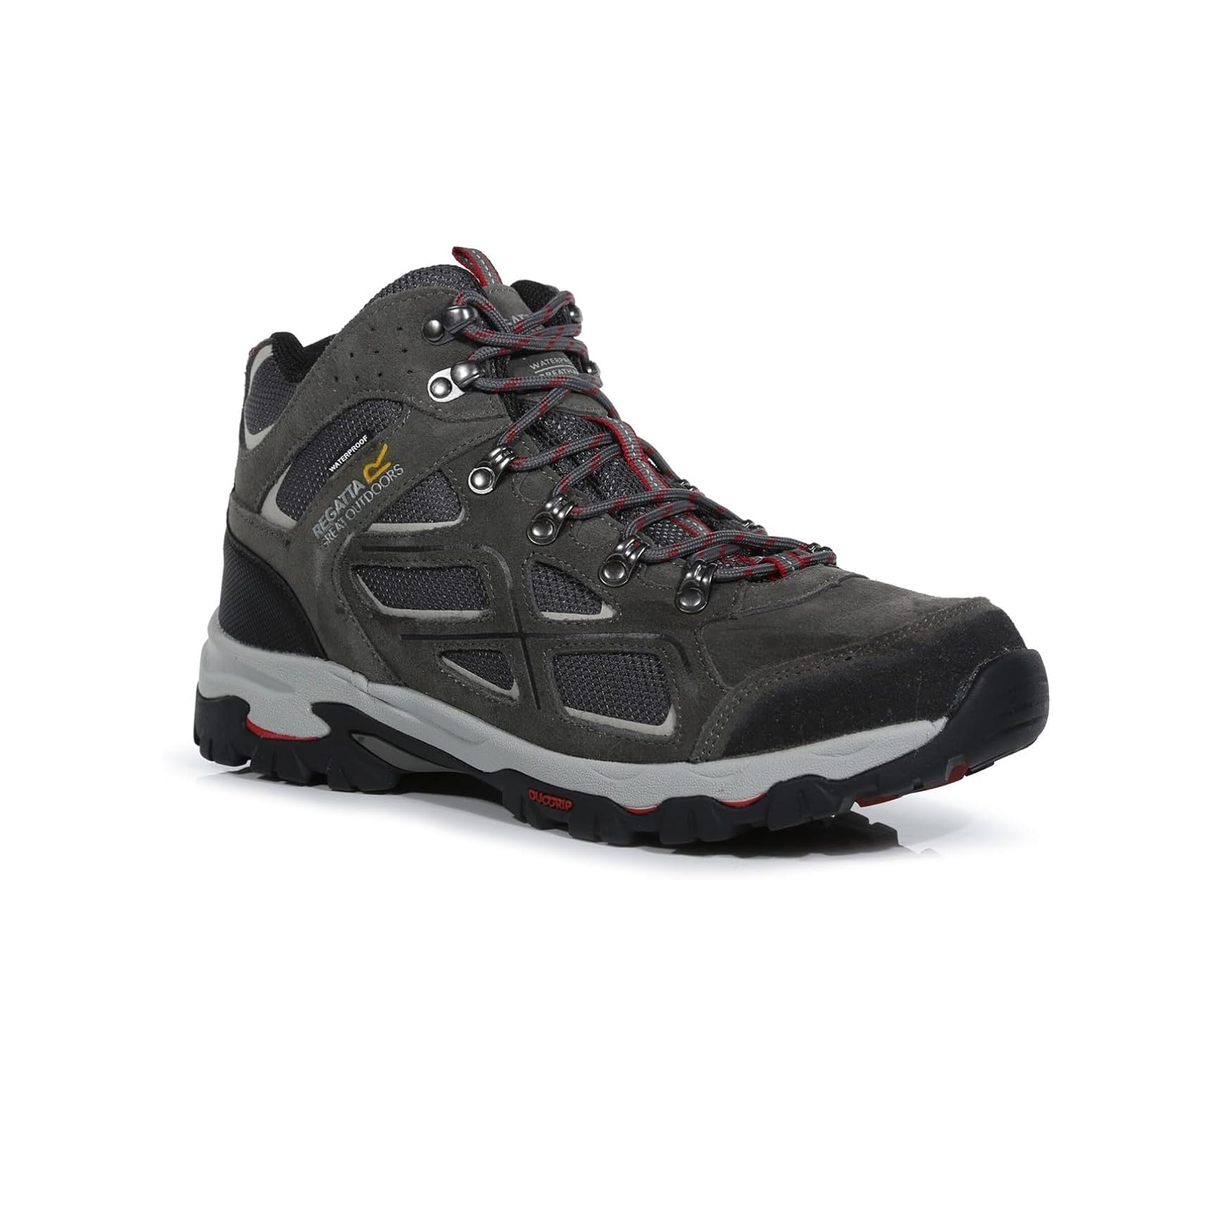 Regatta Tebay Thermo Mens Waterproof Walking Hiking Boots - Briar/Red